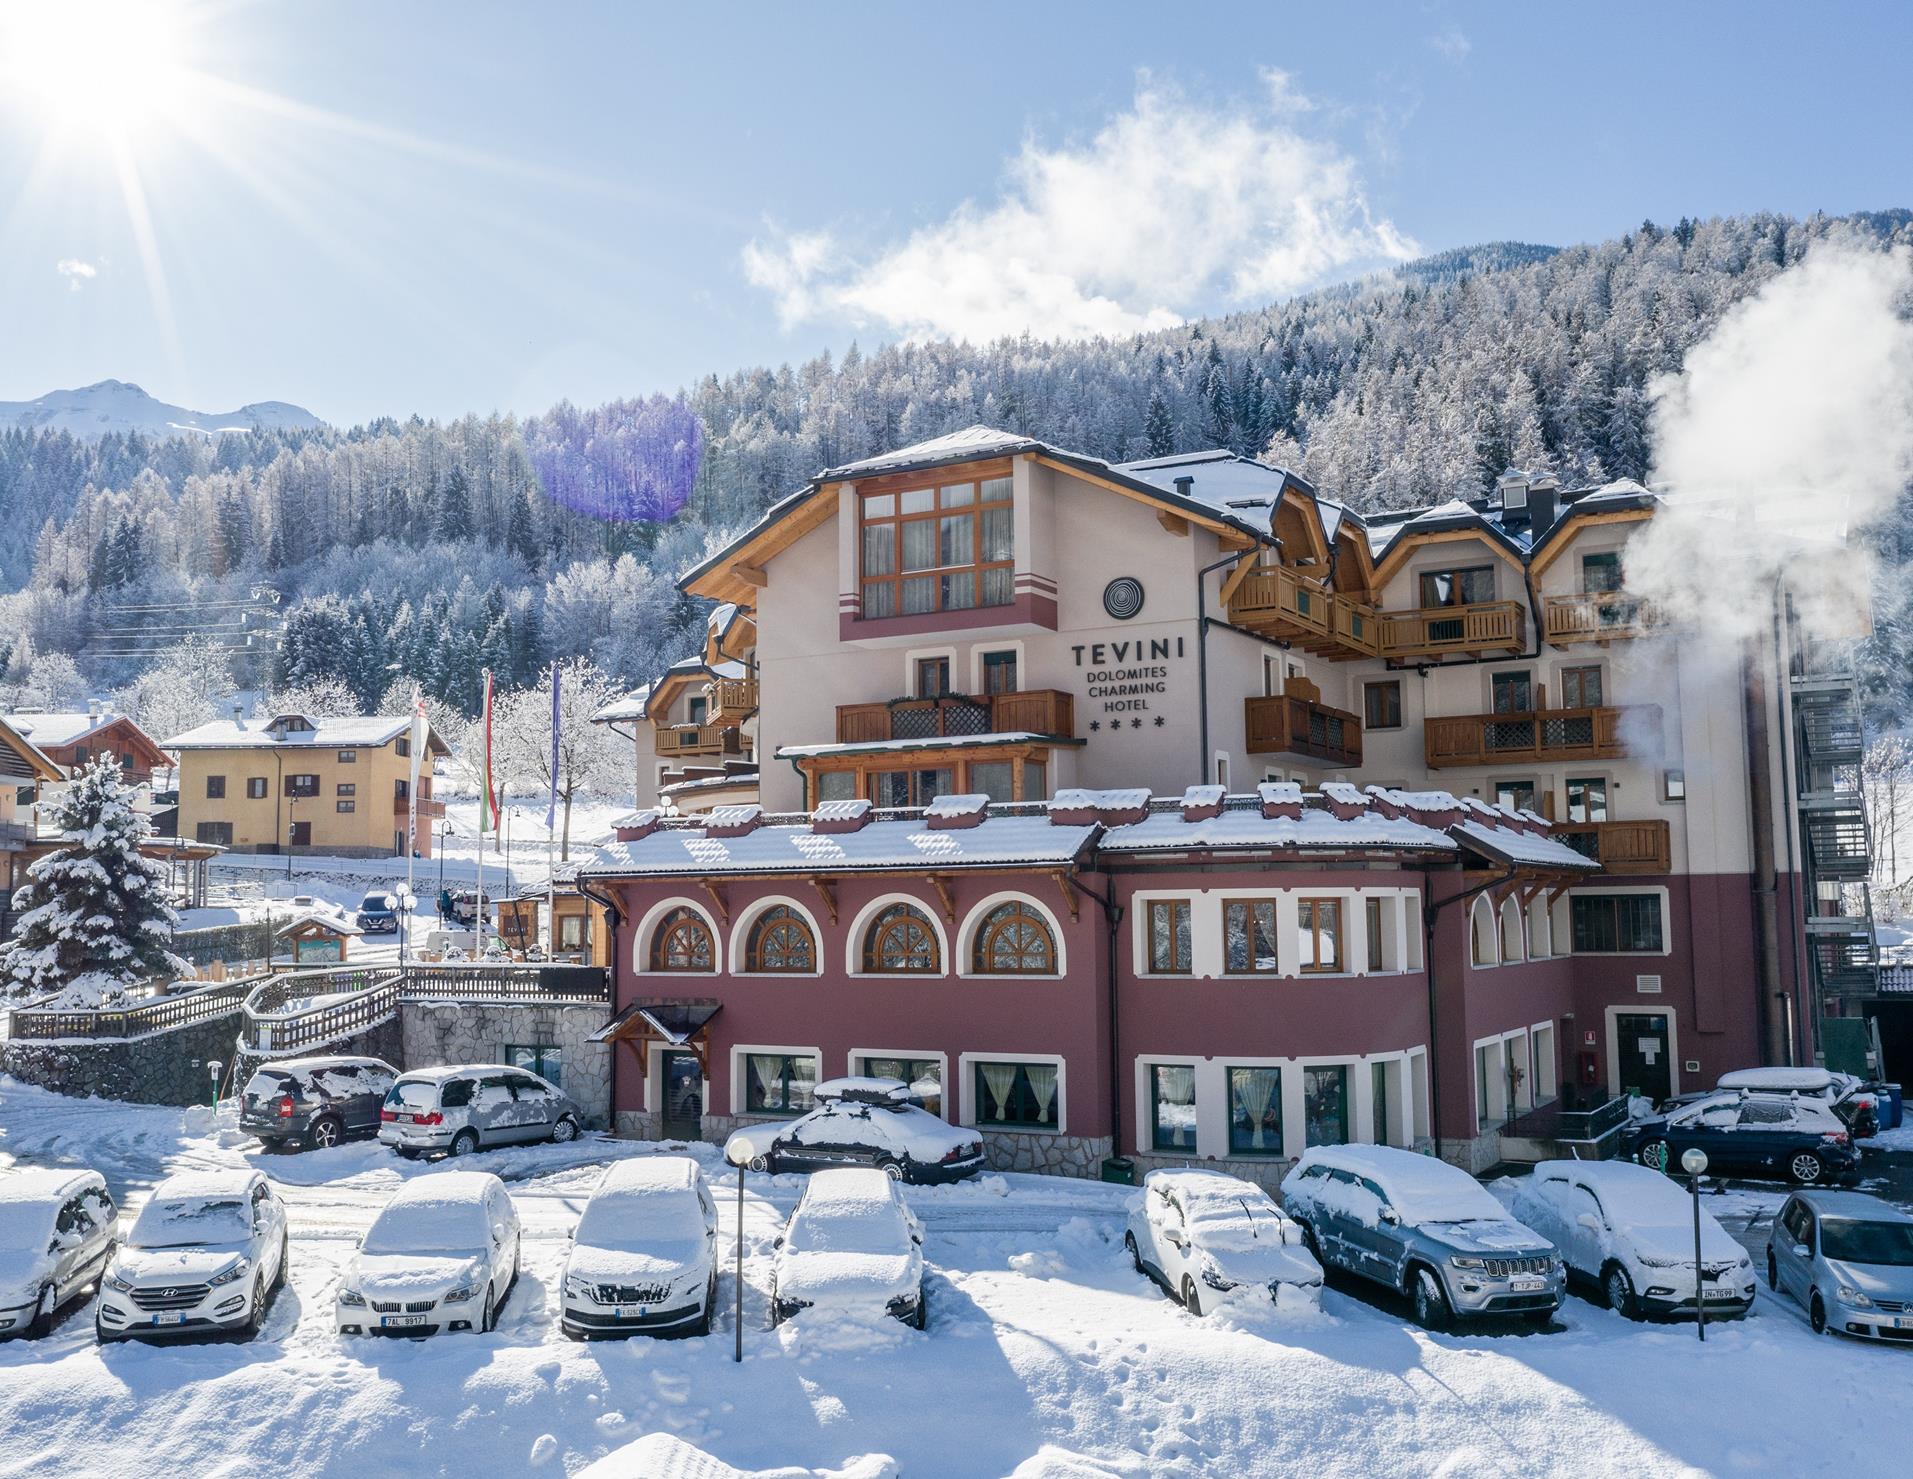 Tevini Dolomites Charming Hotel - Aerial View